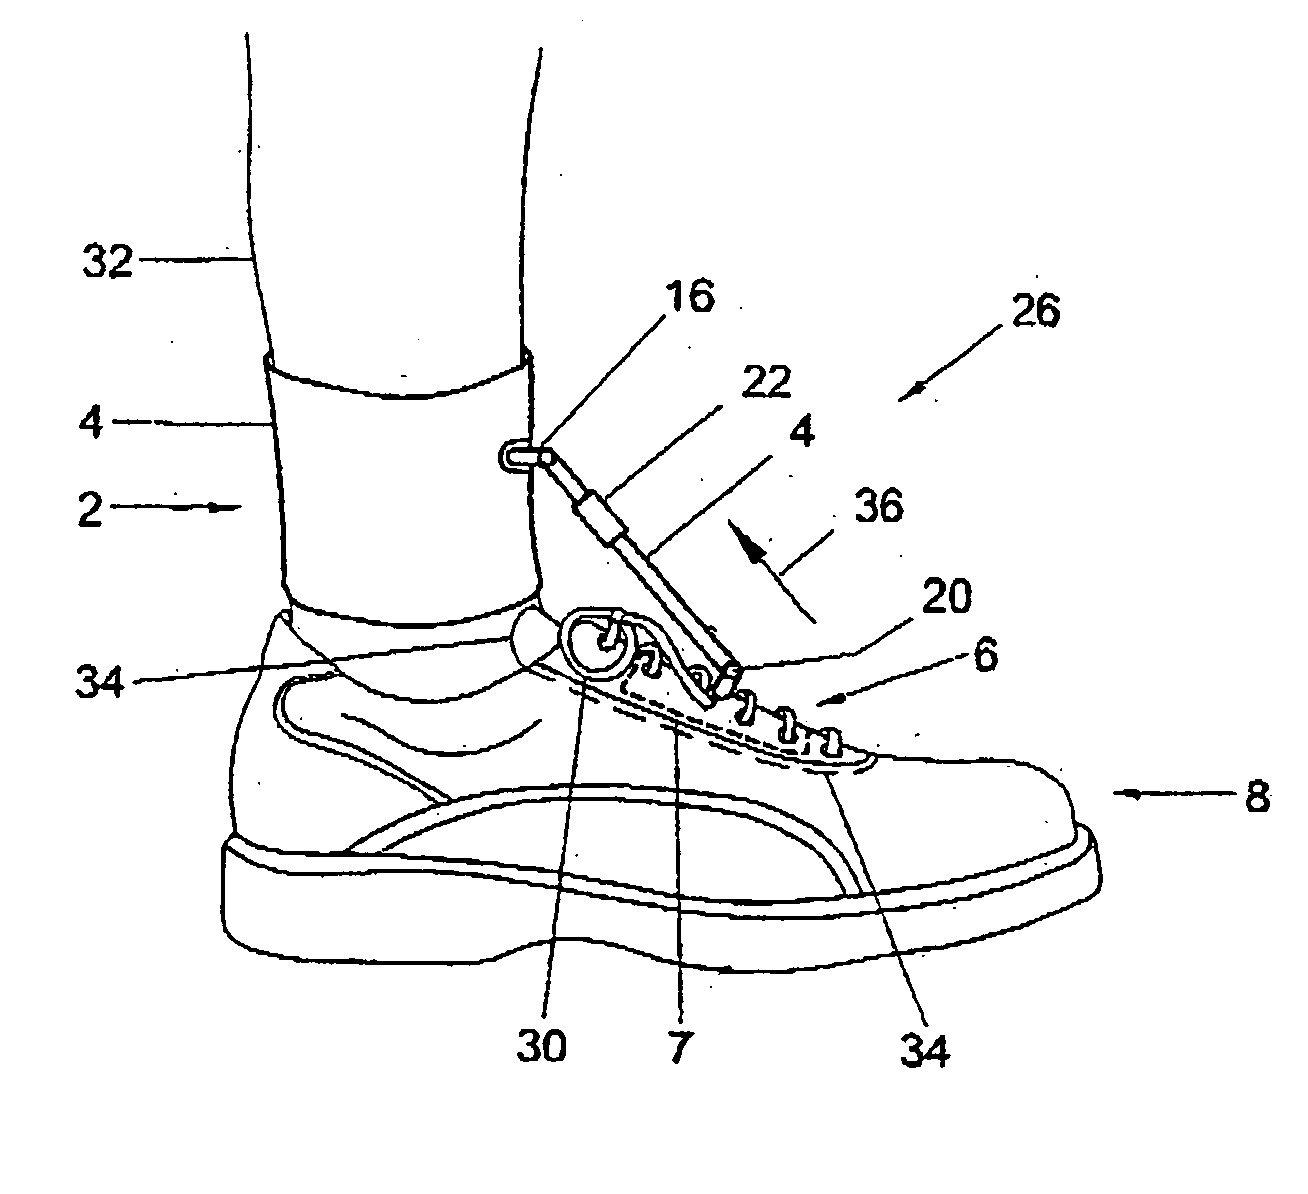 Drop foot device